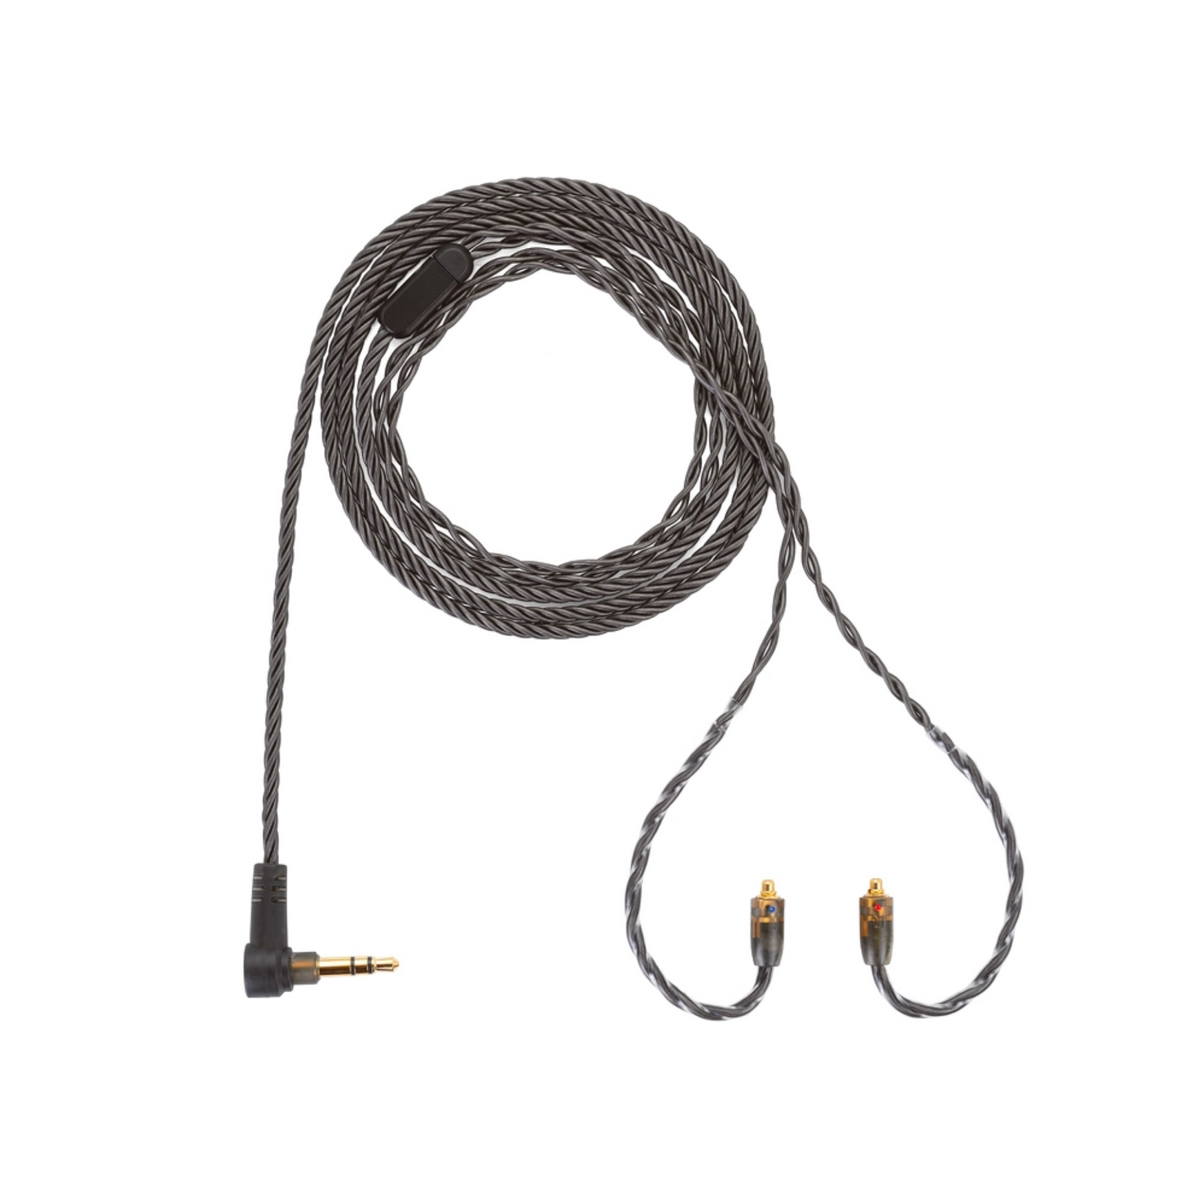 ALO audio Litz Wire Earphone Cable MMCXケーブル 2.5mm kanfa720.com